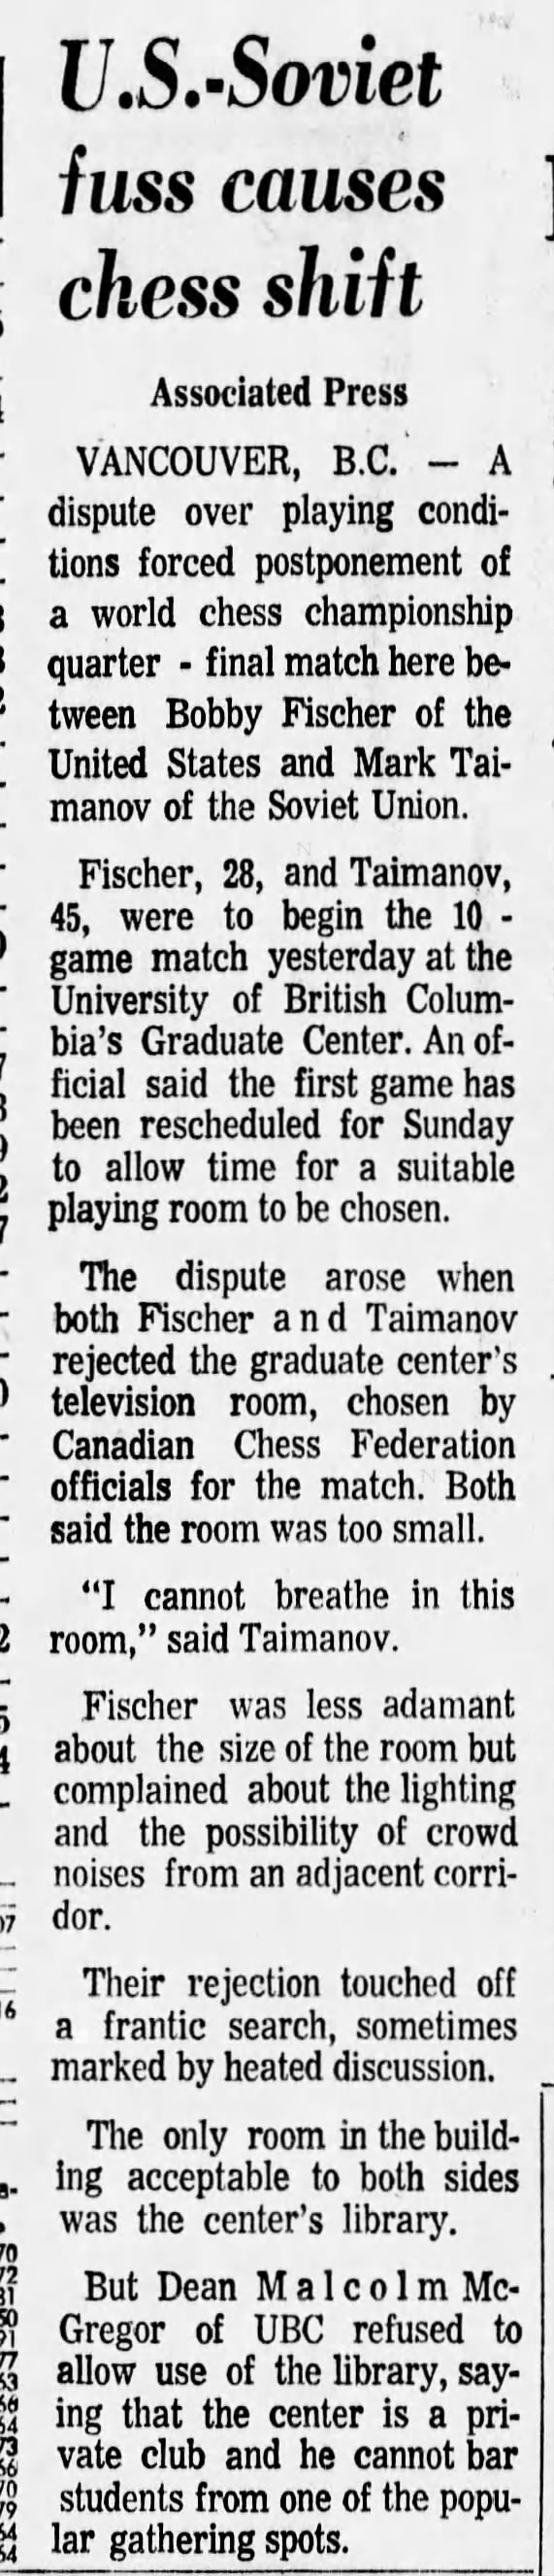 U.S.-Soviet Fuss Causes Chess Shift